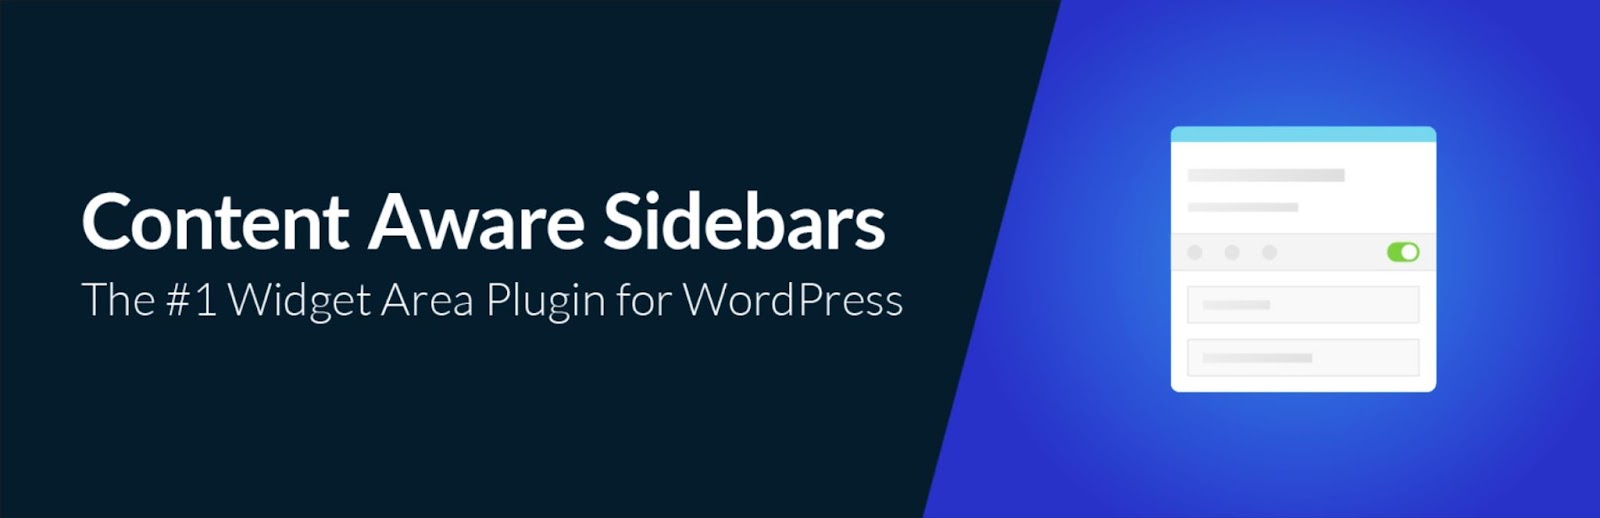 The Content Aware Sidebars plugin for widgets on wordpress.